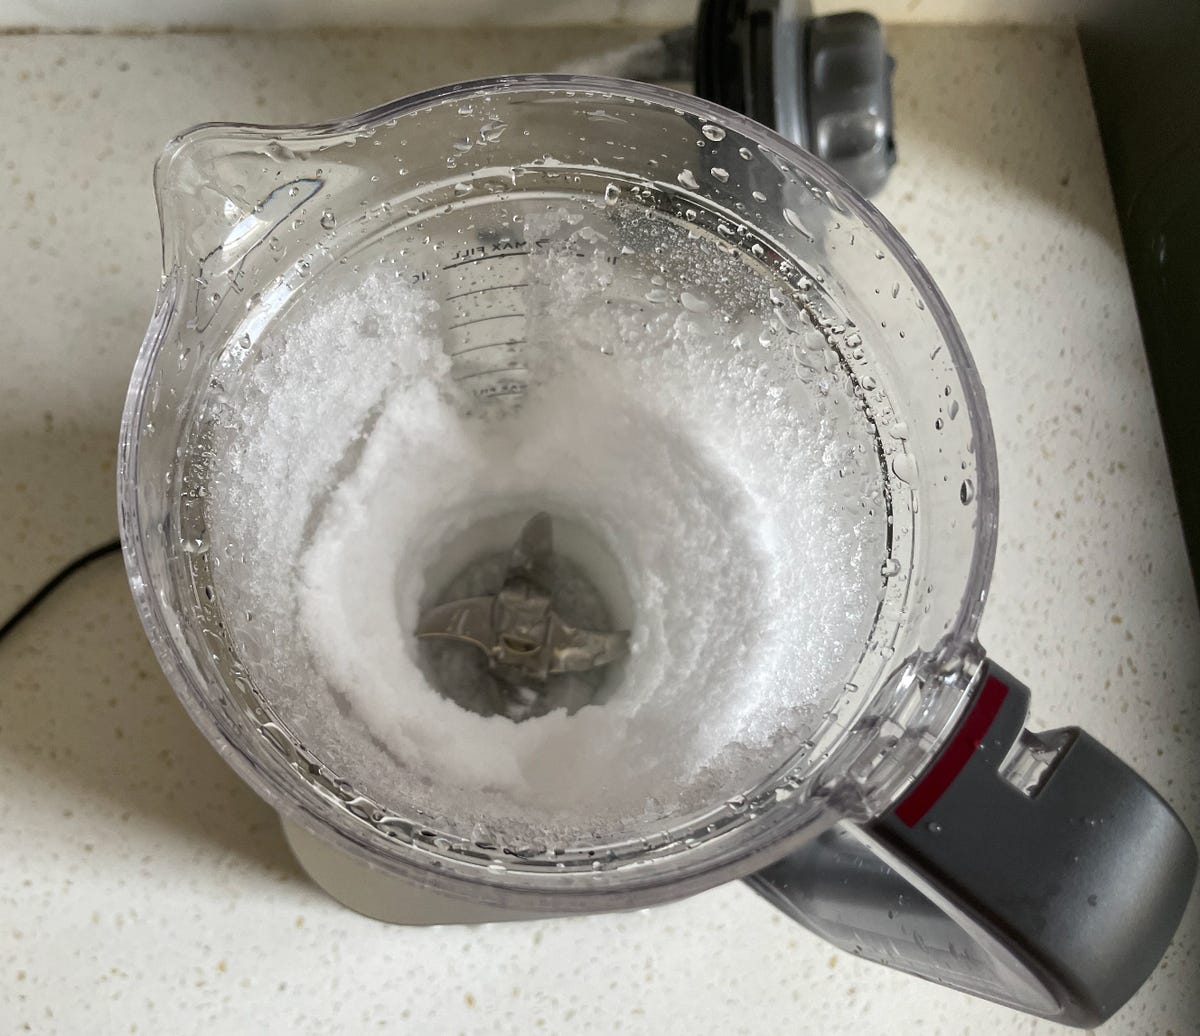 crushed ice inside the blender